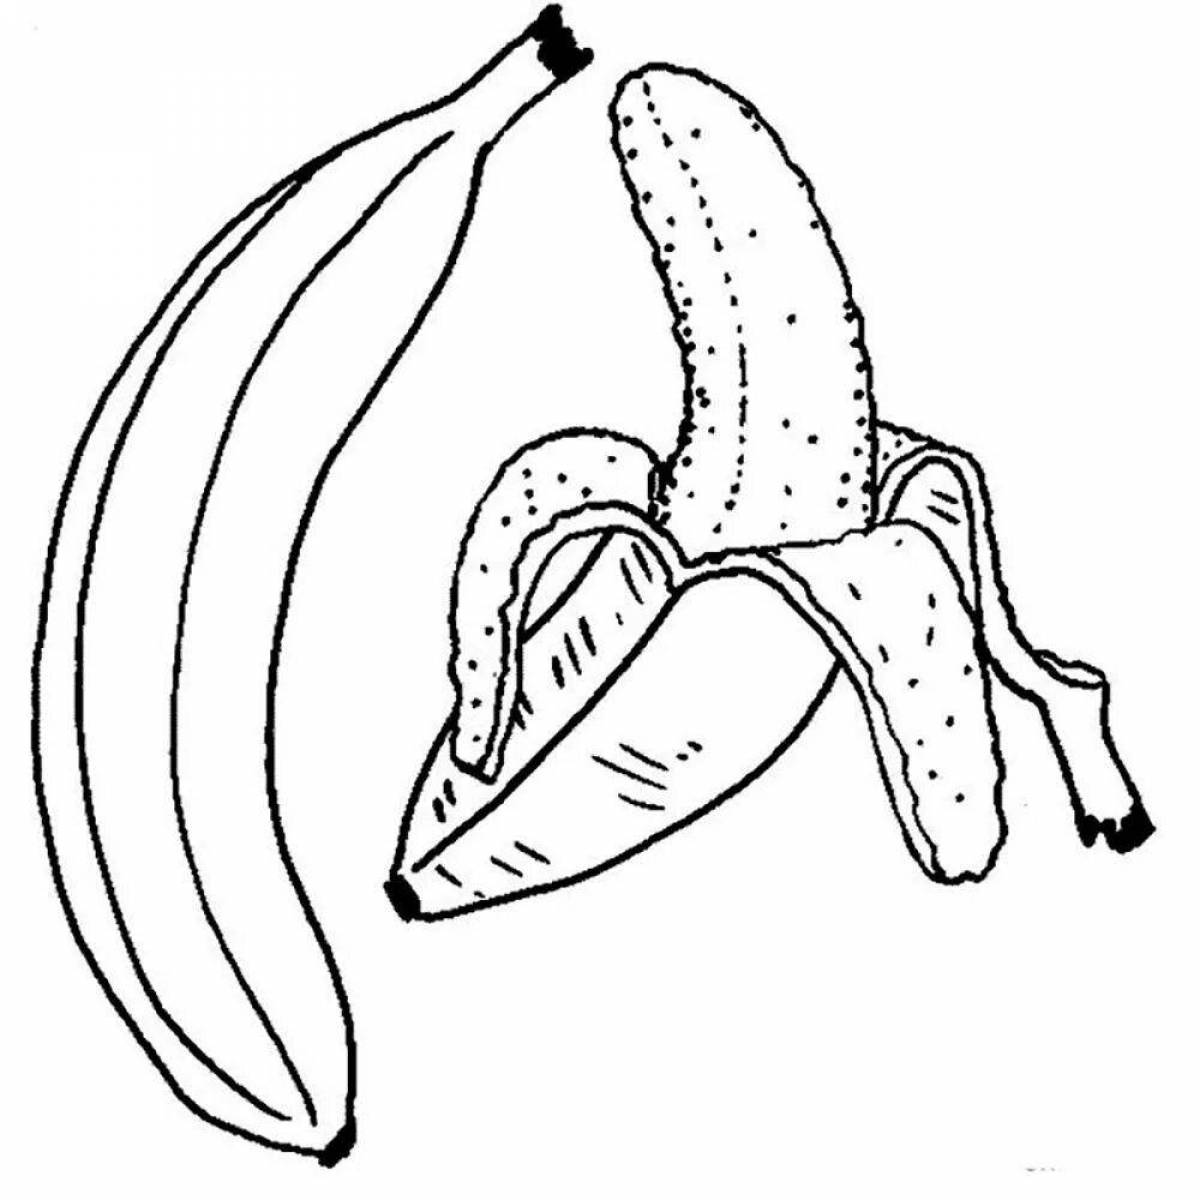 Fancy banana drawing